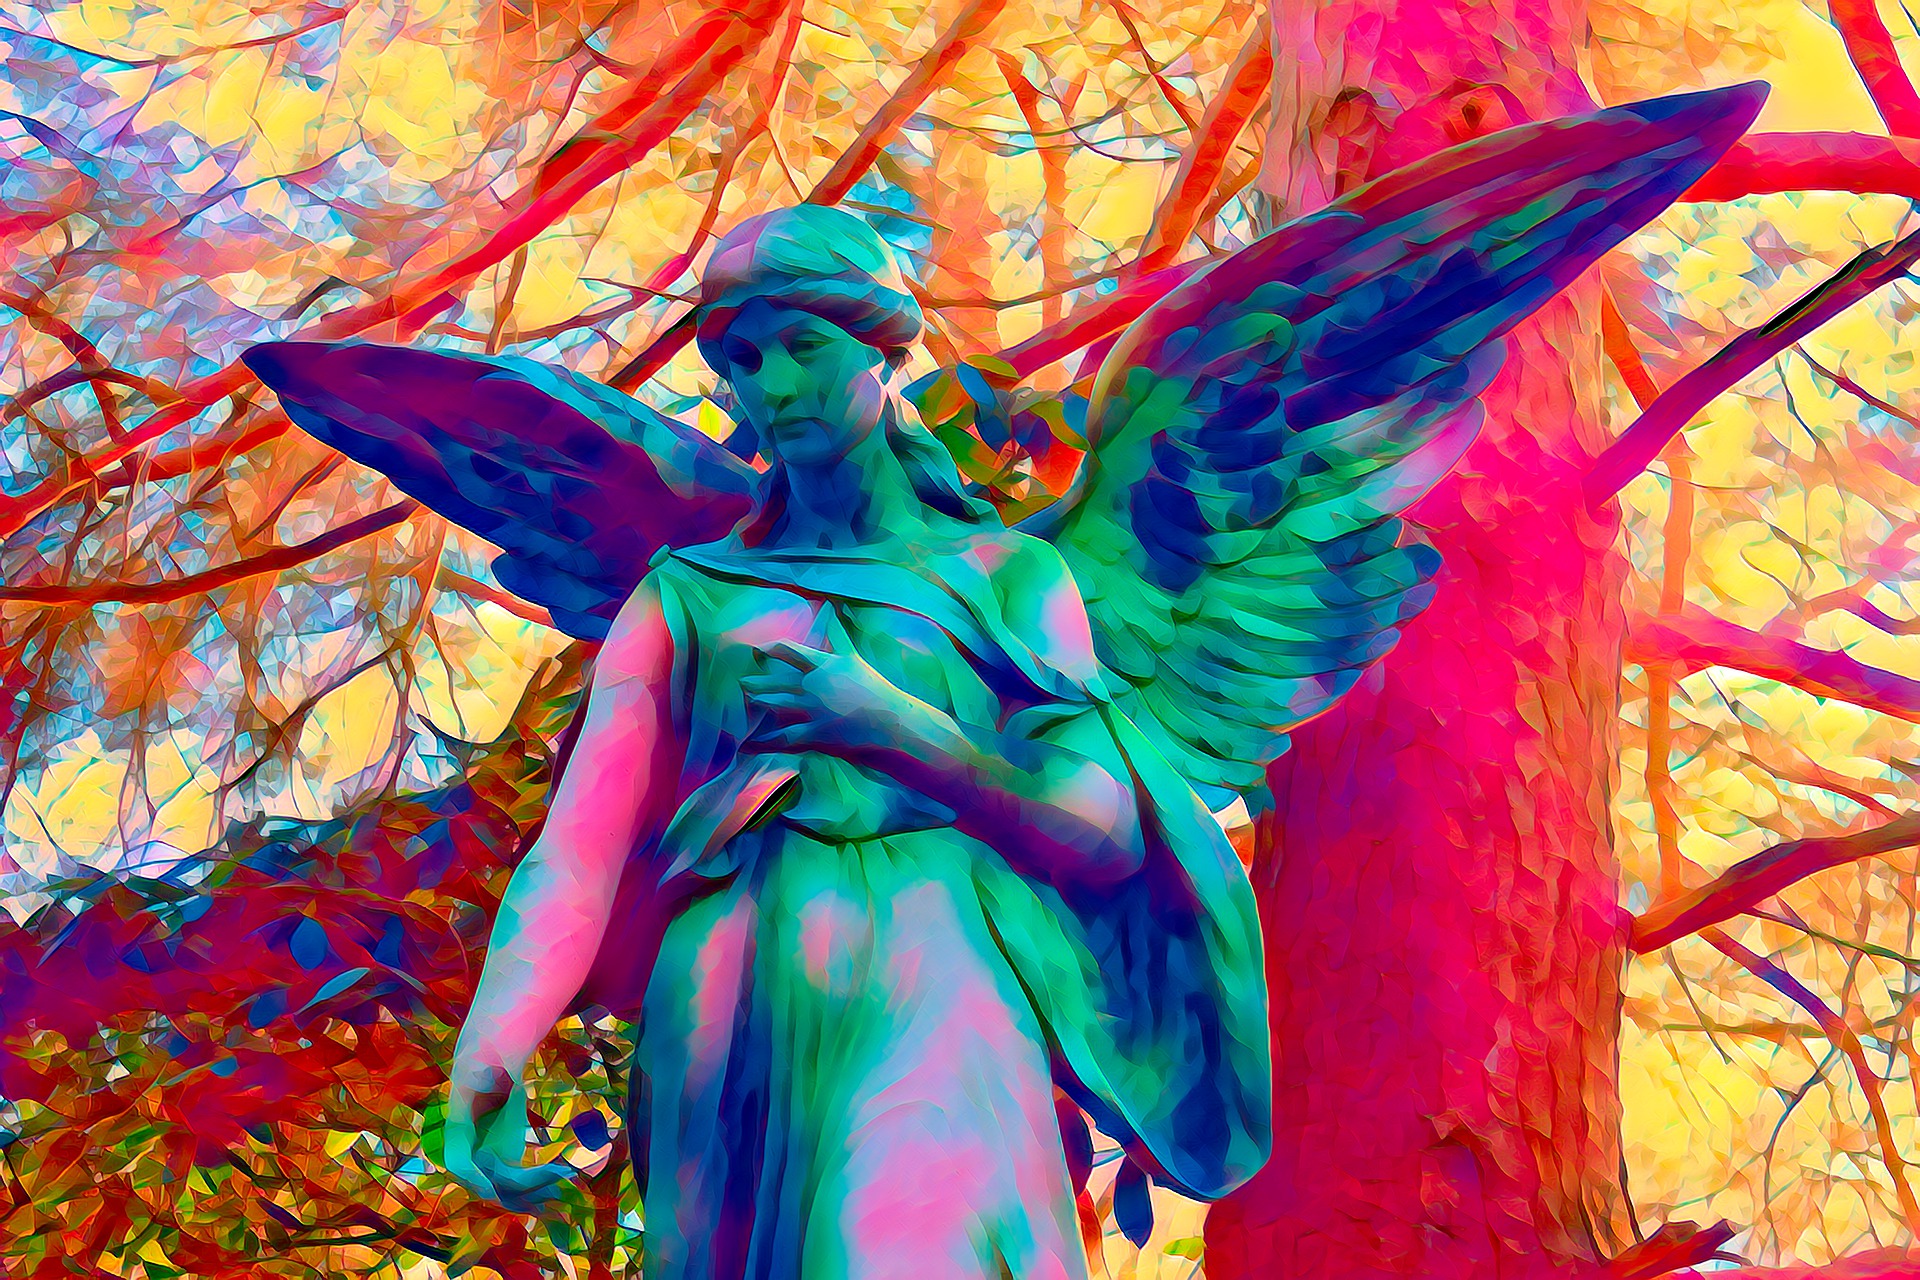 Colorful Artistic Angel Statue in a Cemetery by Marek Studzinski